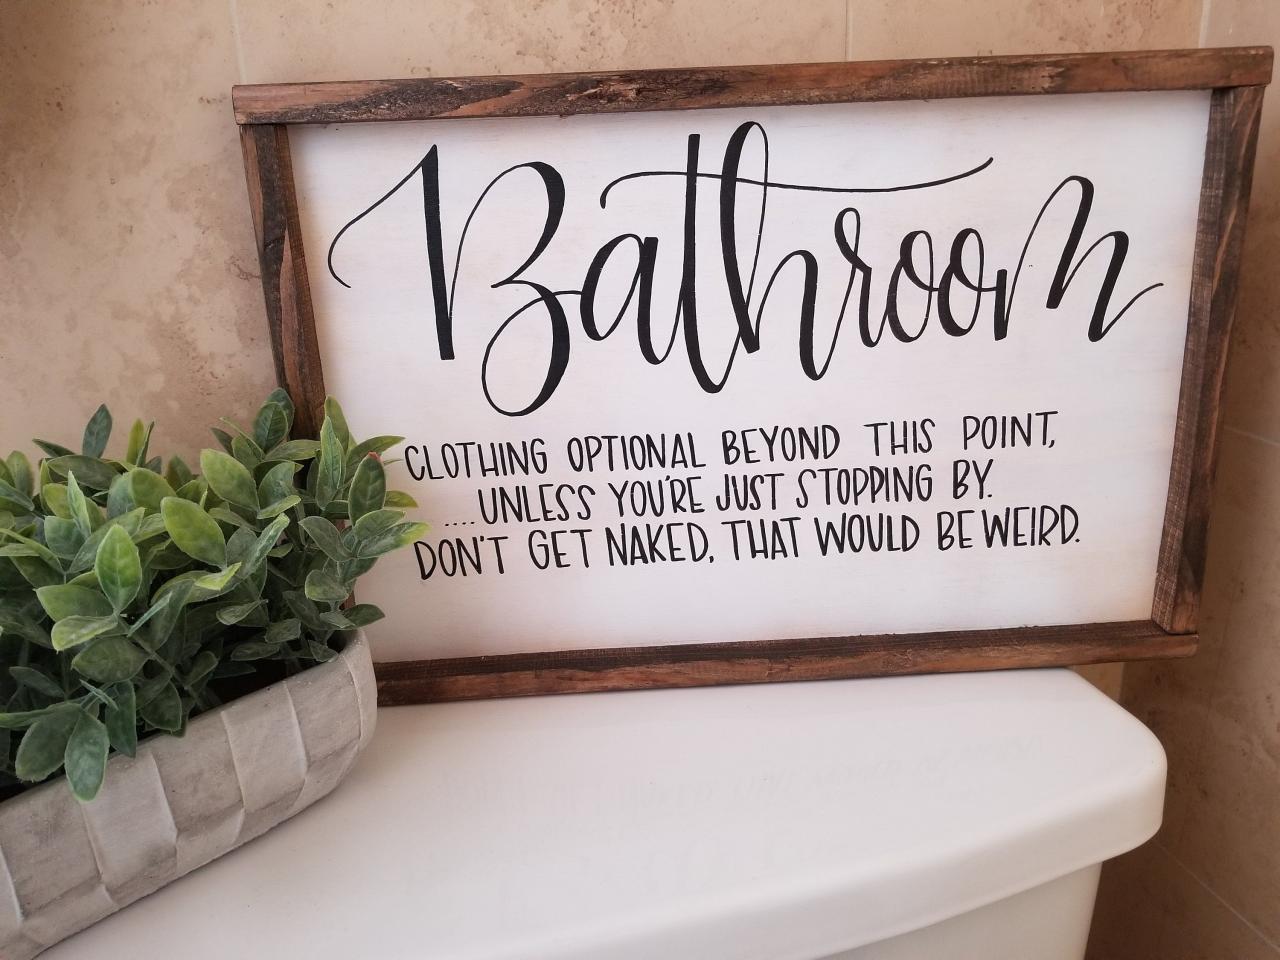 Visit bathroom